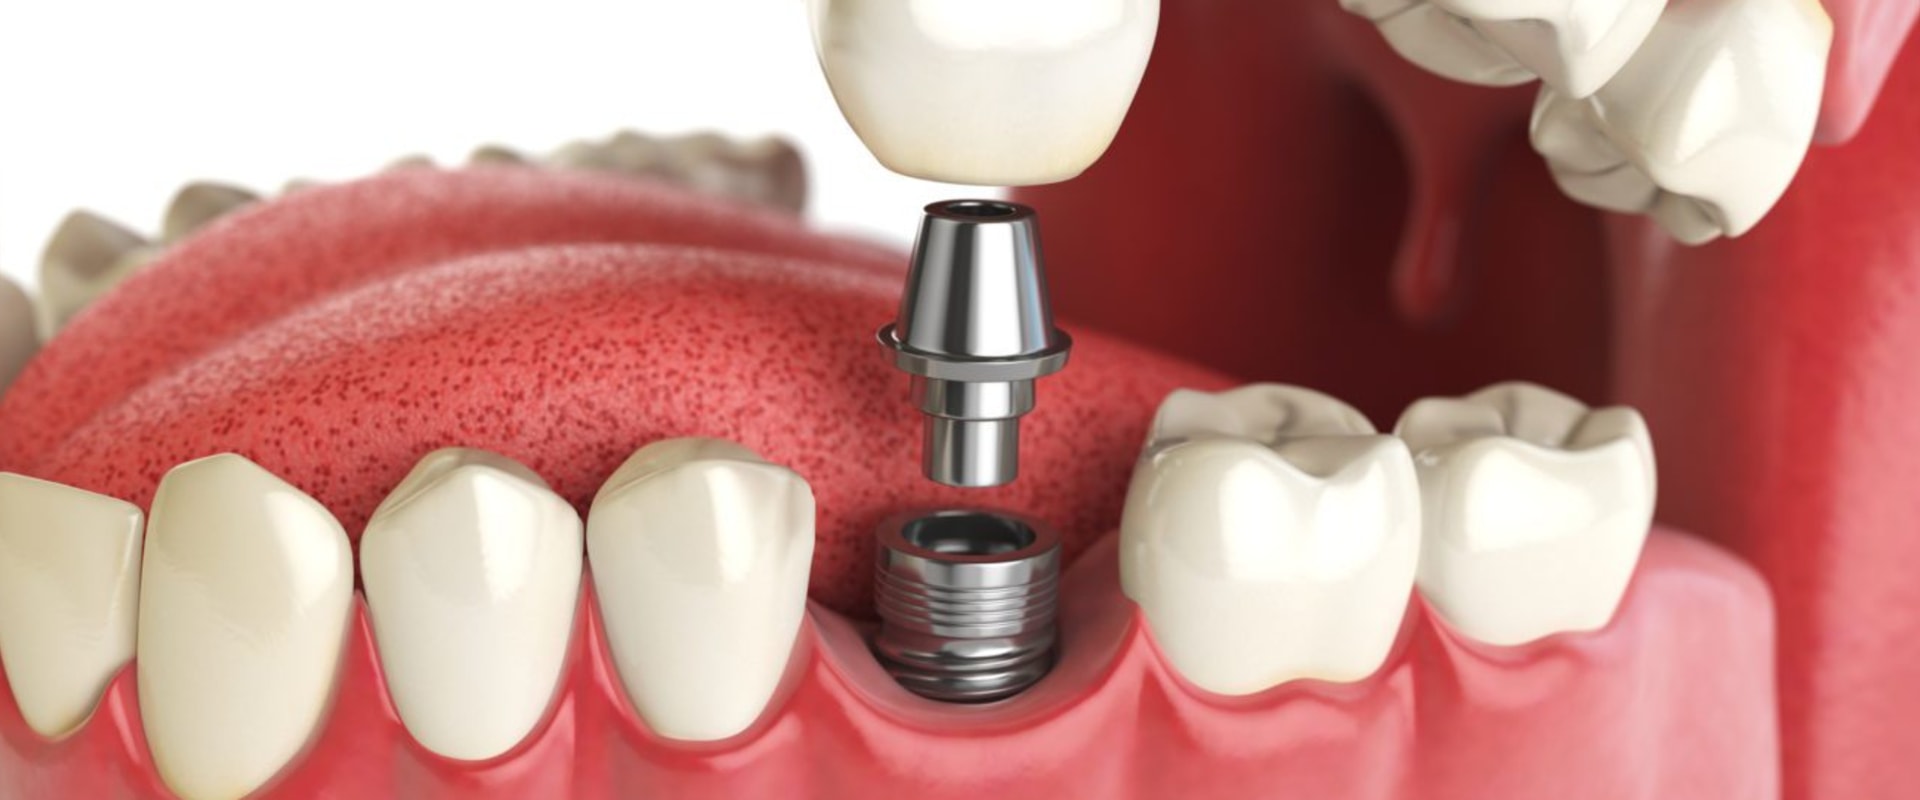 Can dental implants get cavities?